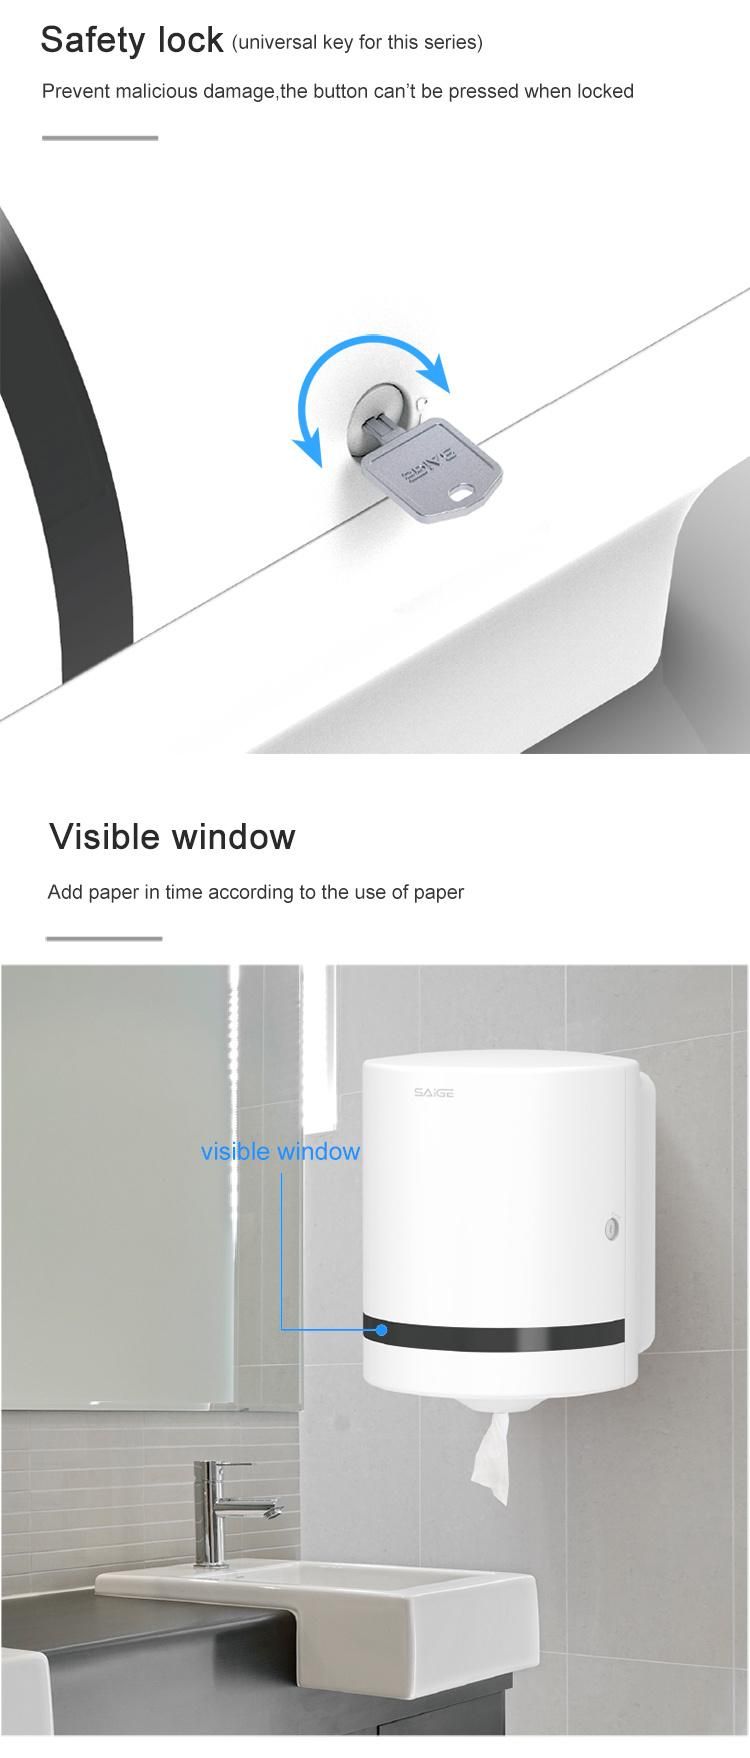 Saige High Quality Plastic Wall Mounted Jumbo Toilet Tissue Paper Dispenser Black